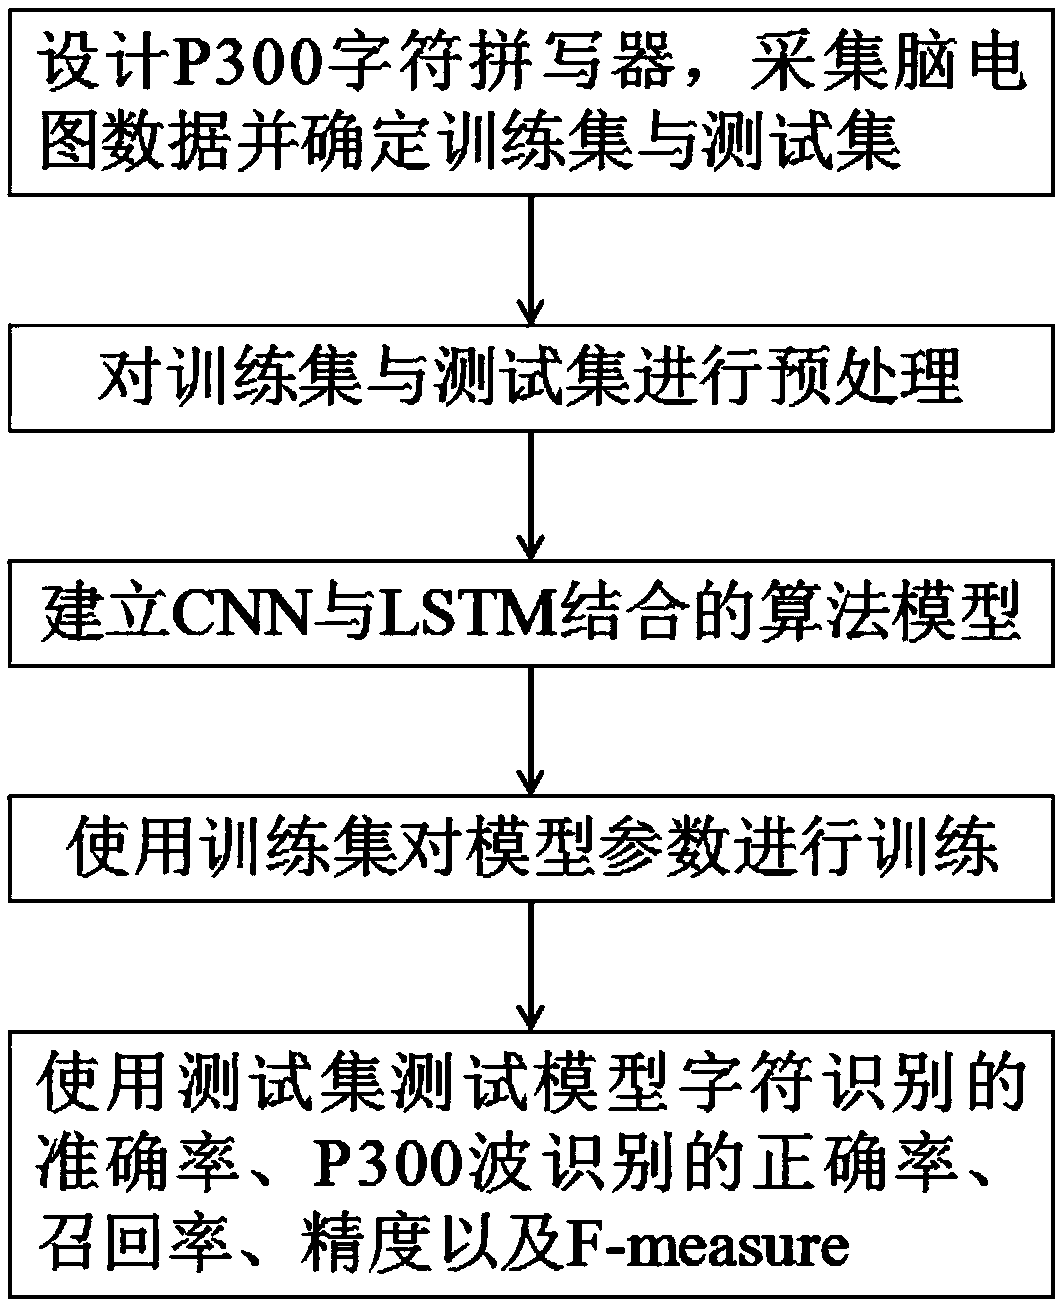 A P300 detection method based on CNN-LSTM network